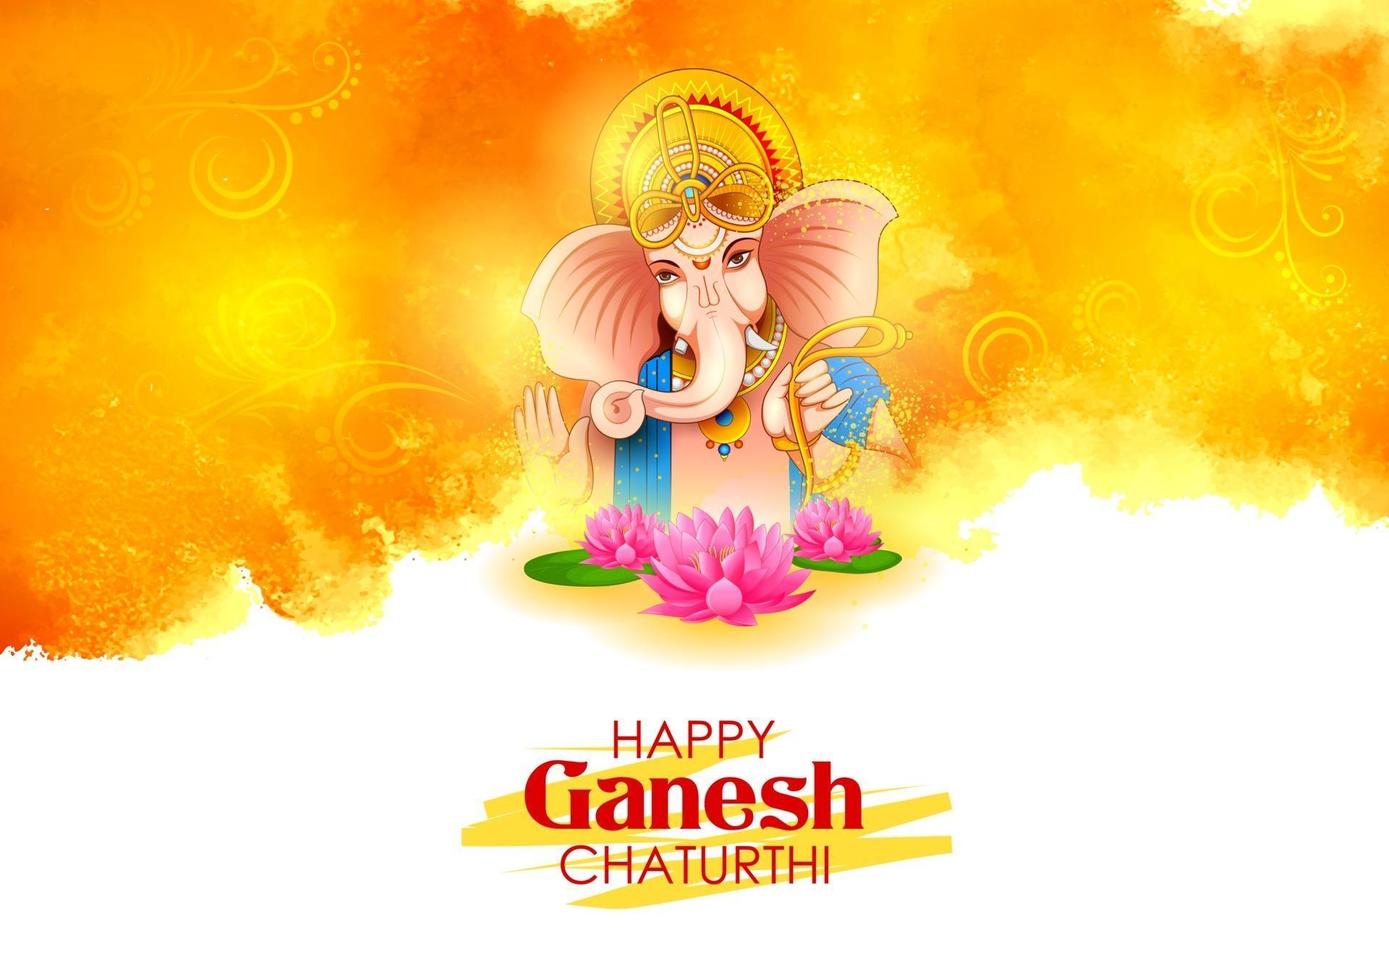 lord ganpati bakgrund för ganesh chaturthi festival i Indien vektor